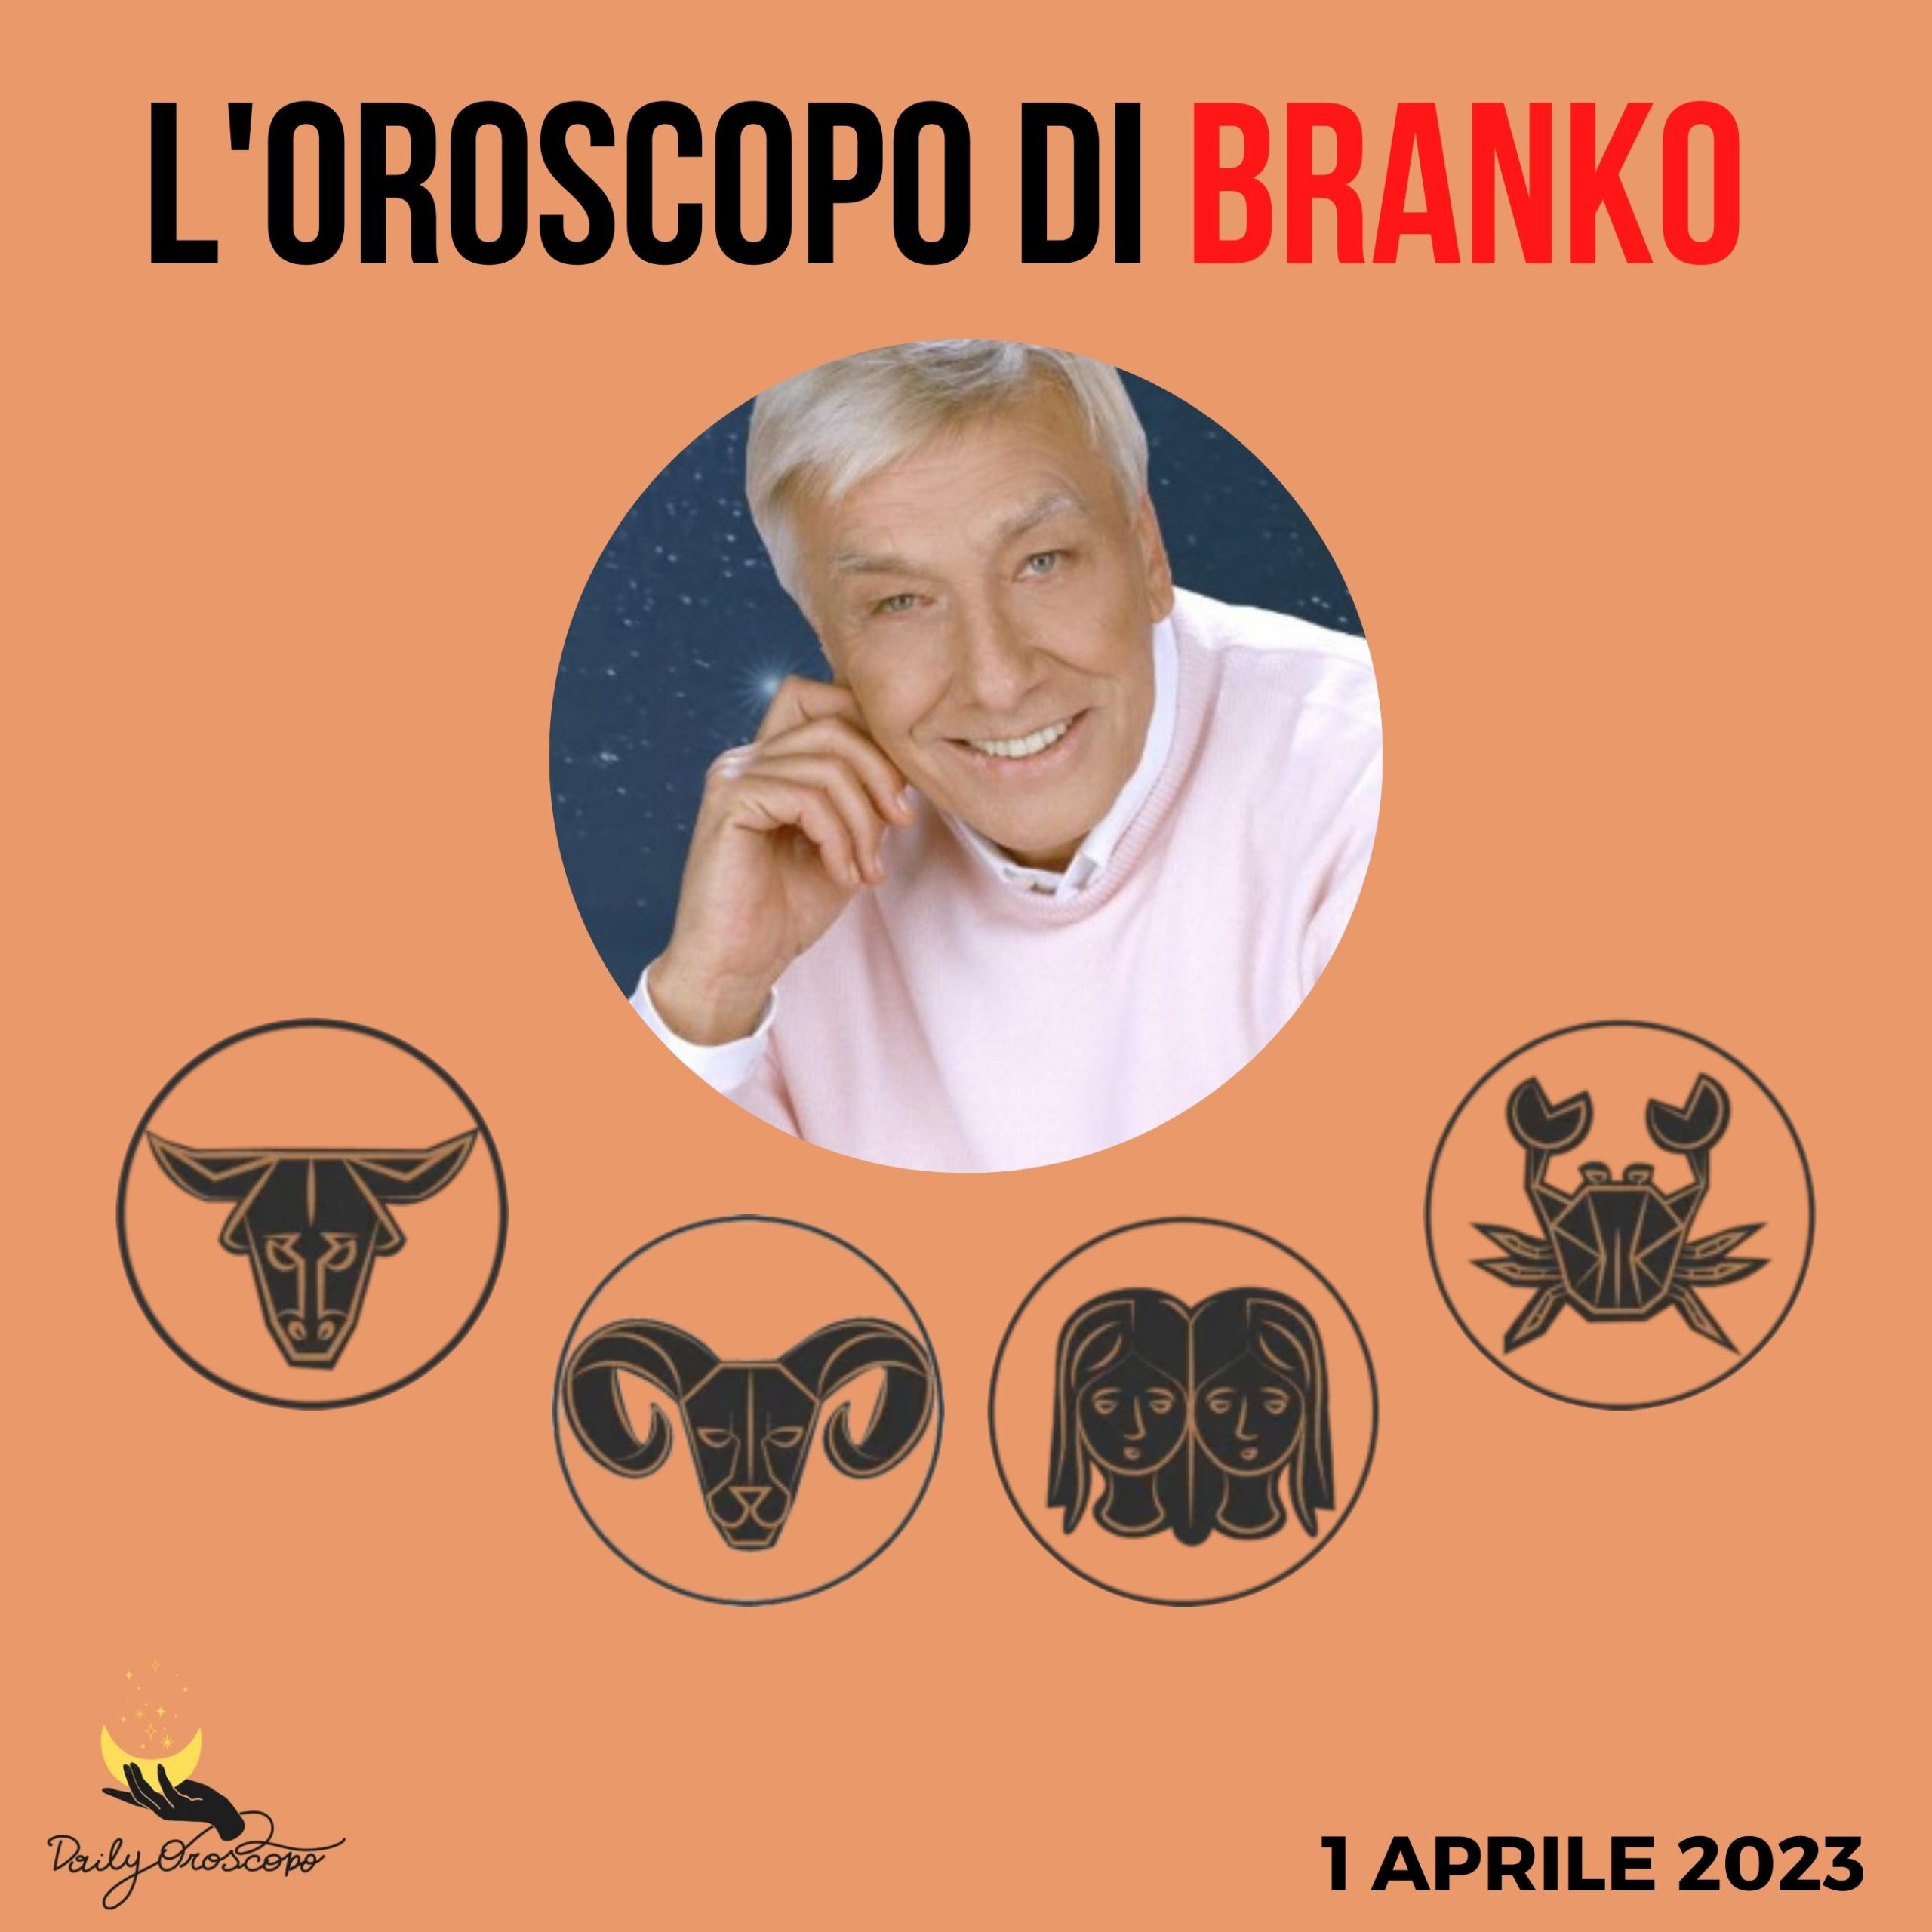 Oroscopo Branko oggi 1 aprile 2023 Toro Ariete Gemelli Cancro